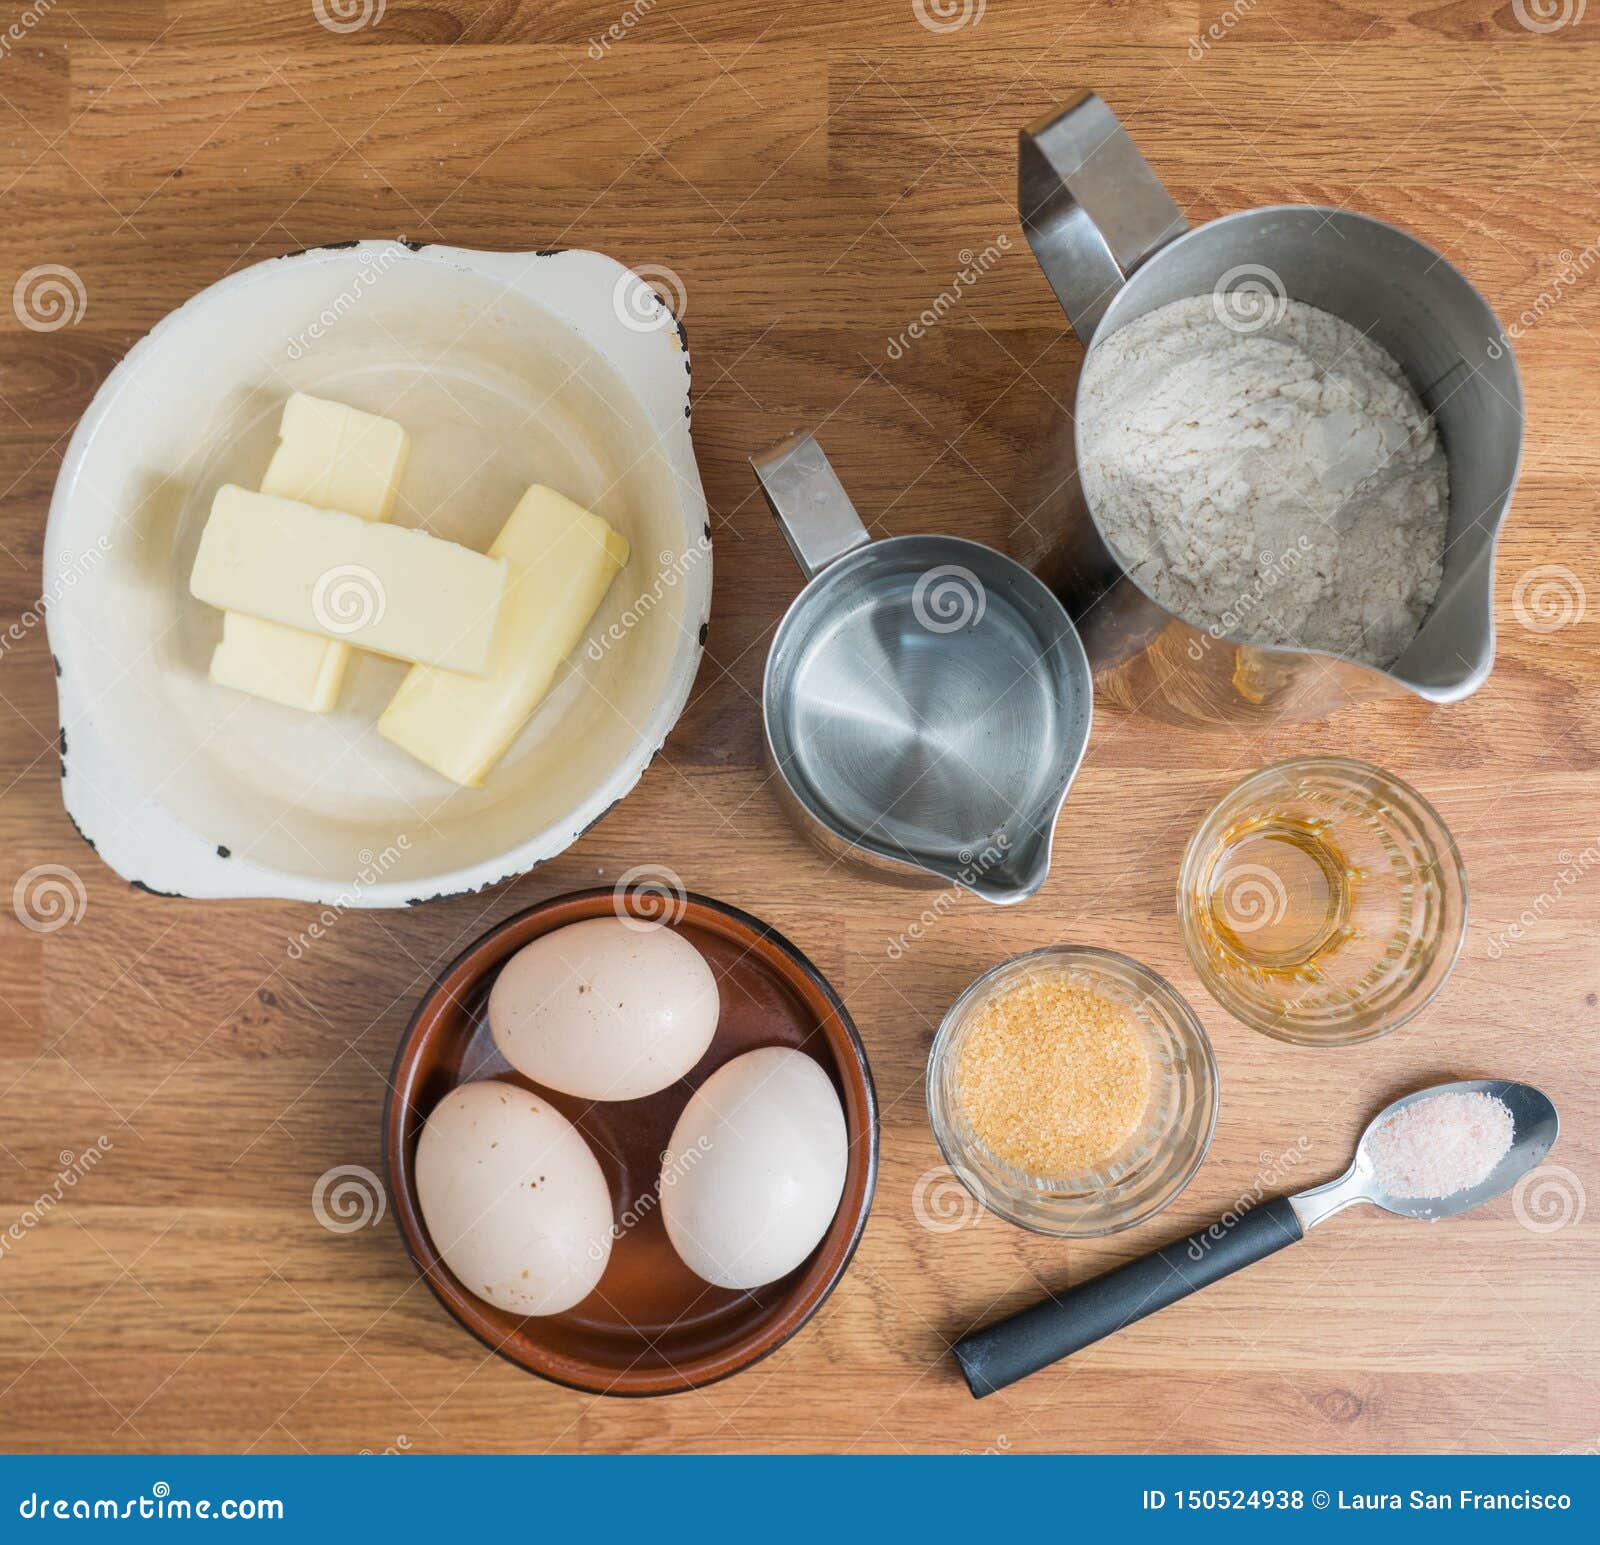 https://thumbs.dreamstime.com/z/baking-cake-ingredients-baking-cake-kitchen-dough-recipe-ingredients-eggs-flour-water-butter-sugar-vanilla-wooden-table-150524938.jpg